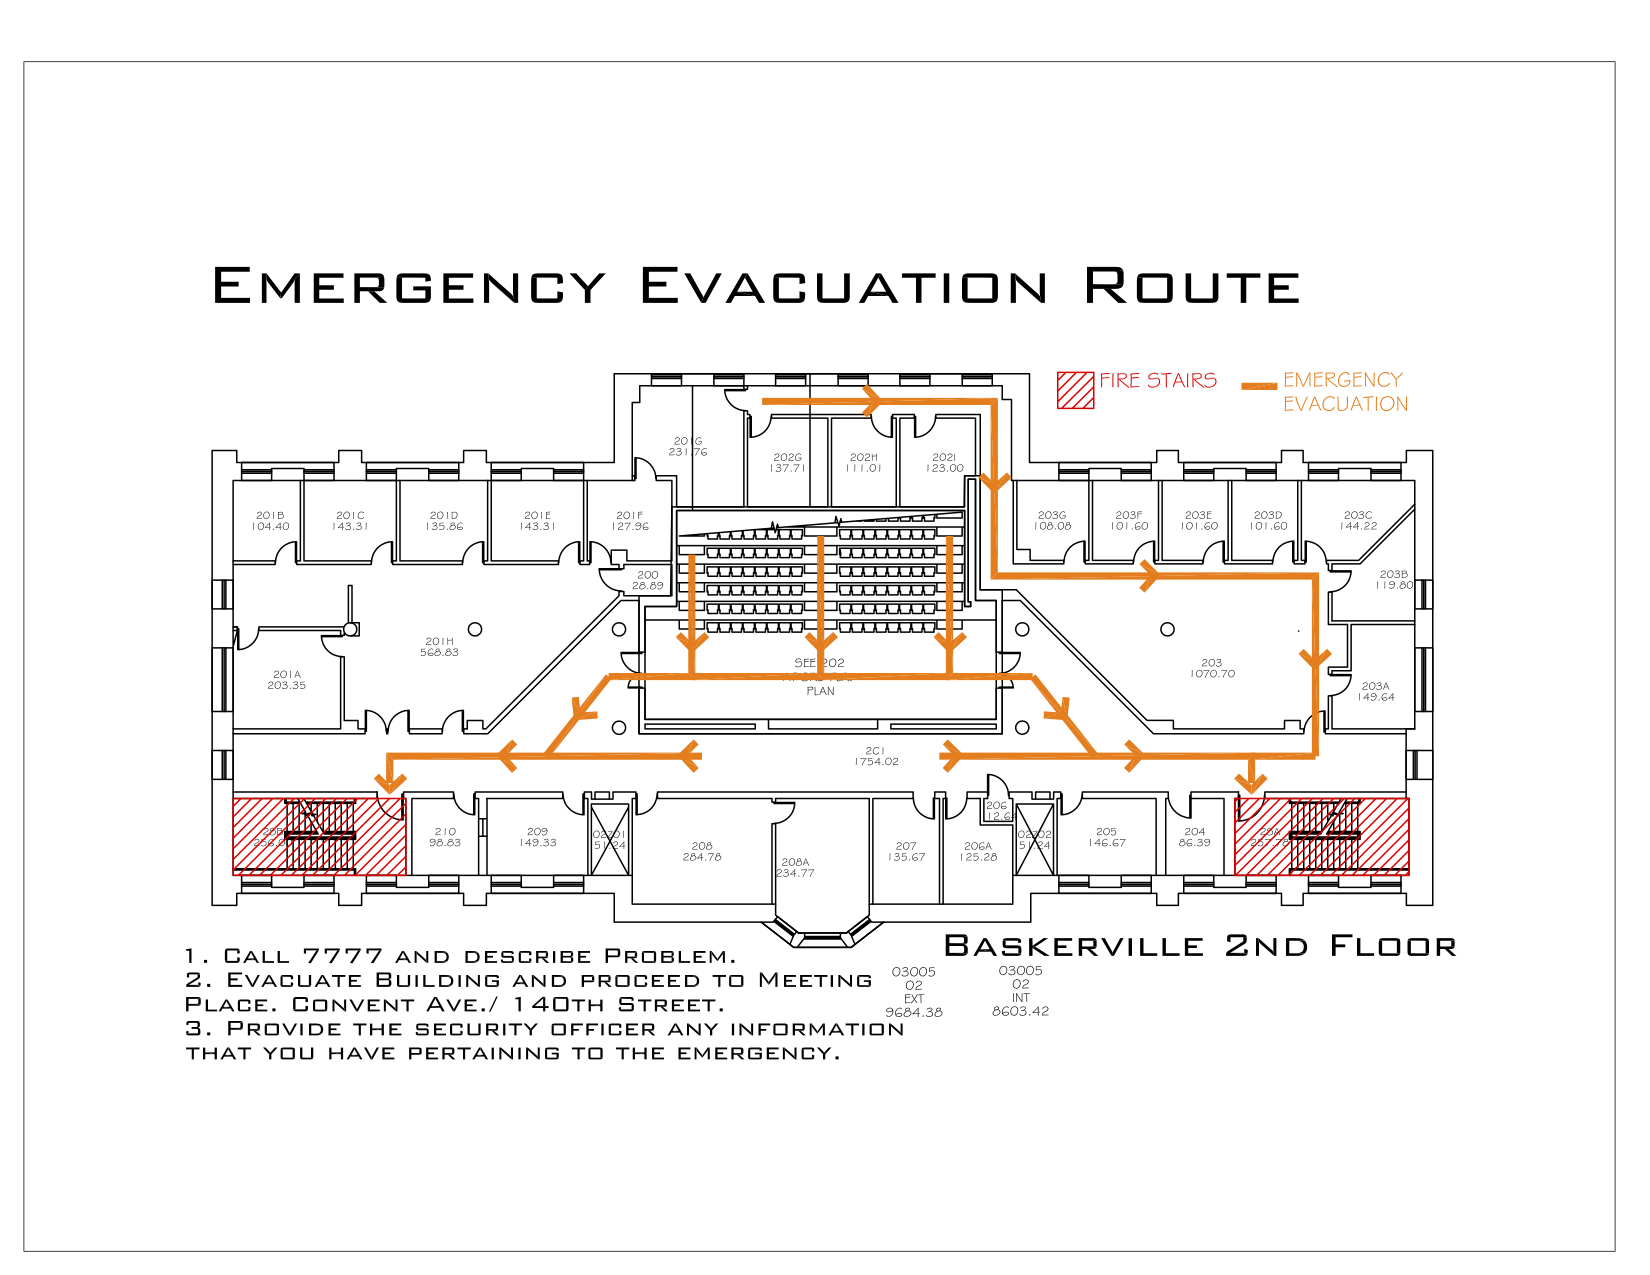 Baskerville Hall - Evacuation Route 4